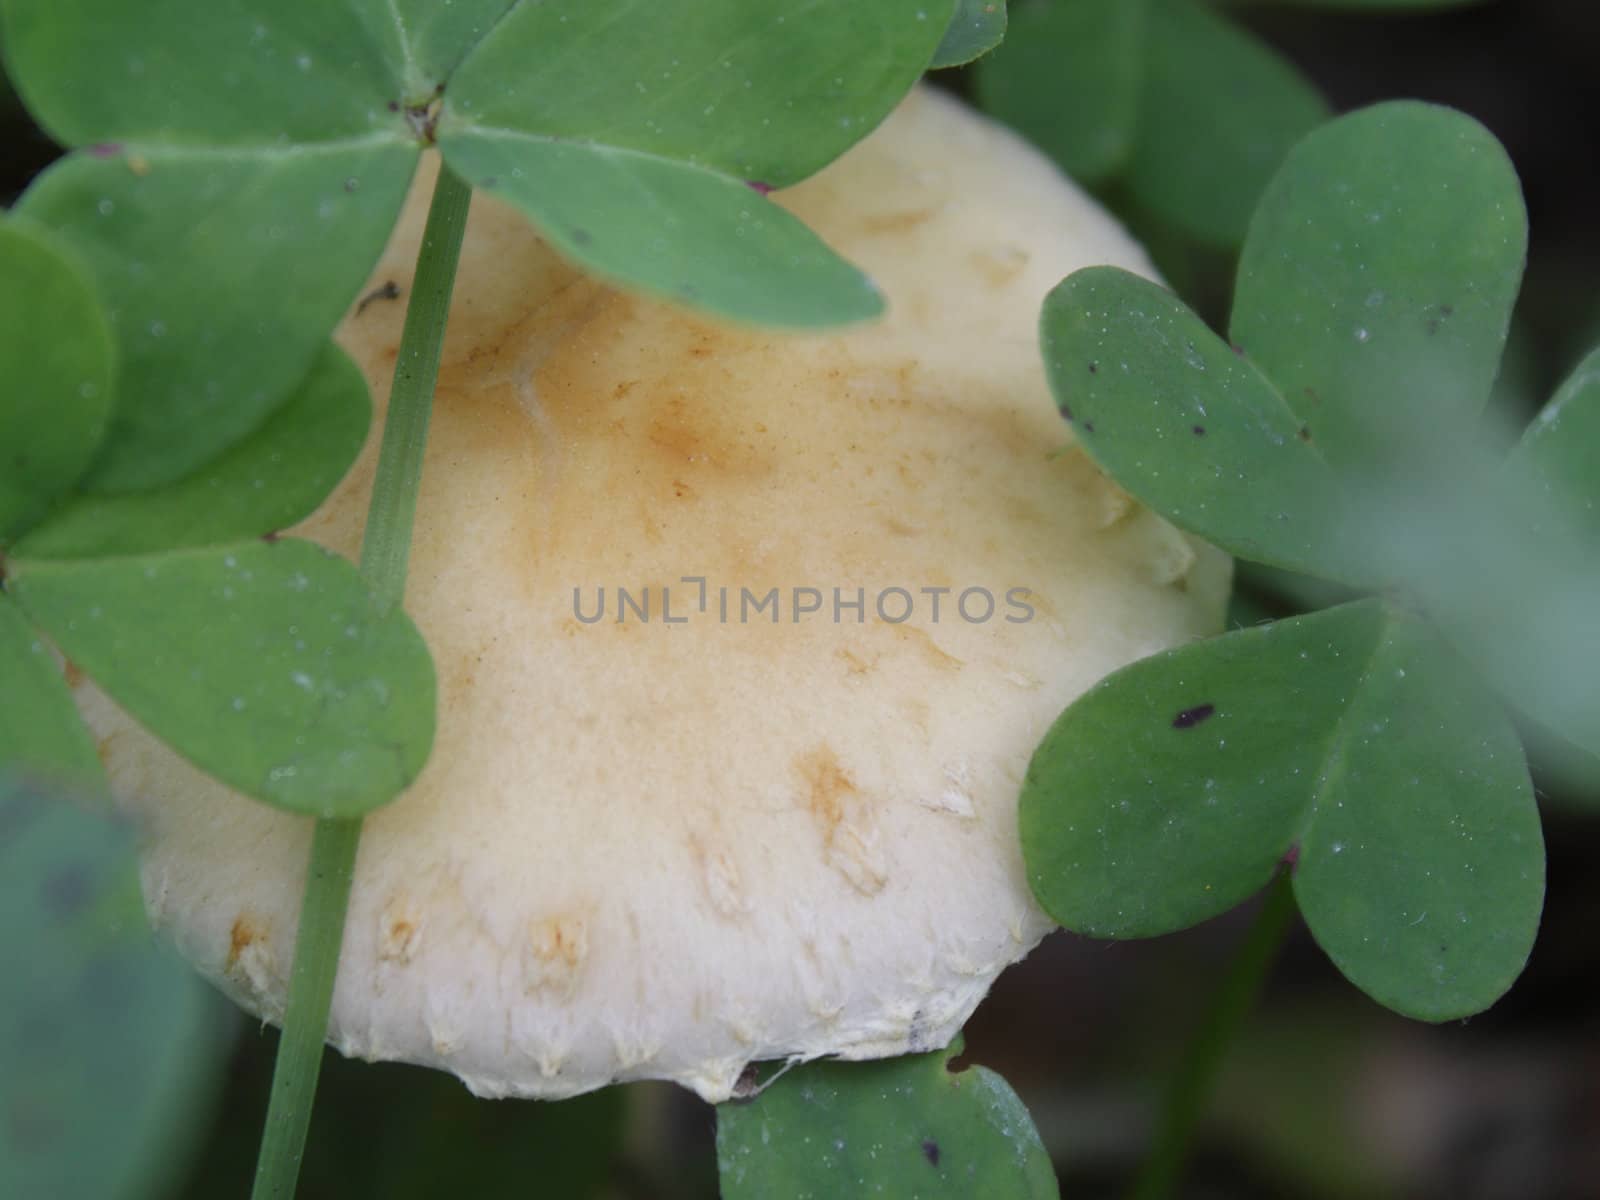 A single mushroom of light brown color among clover